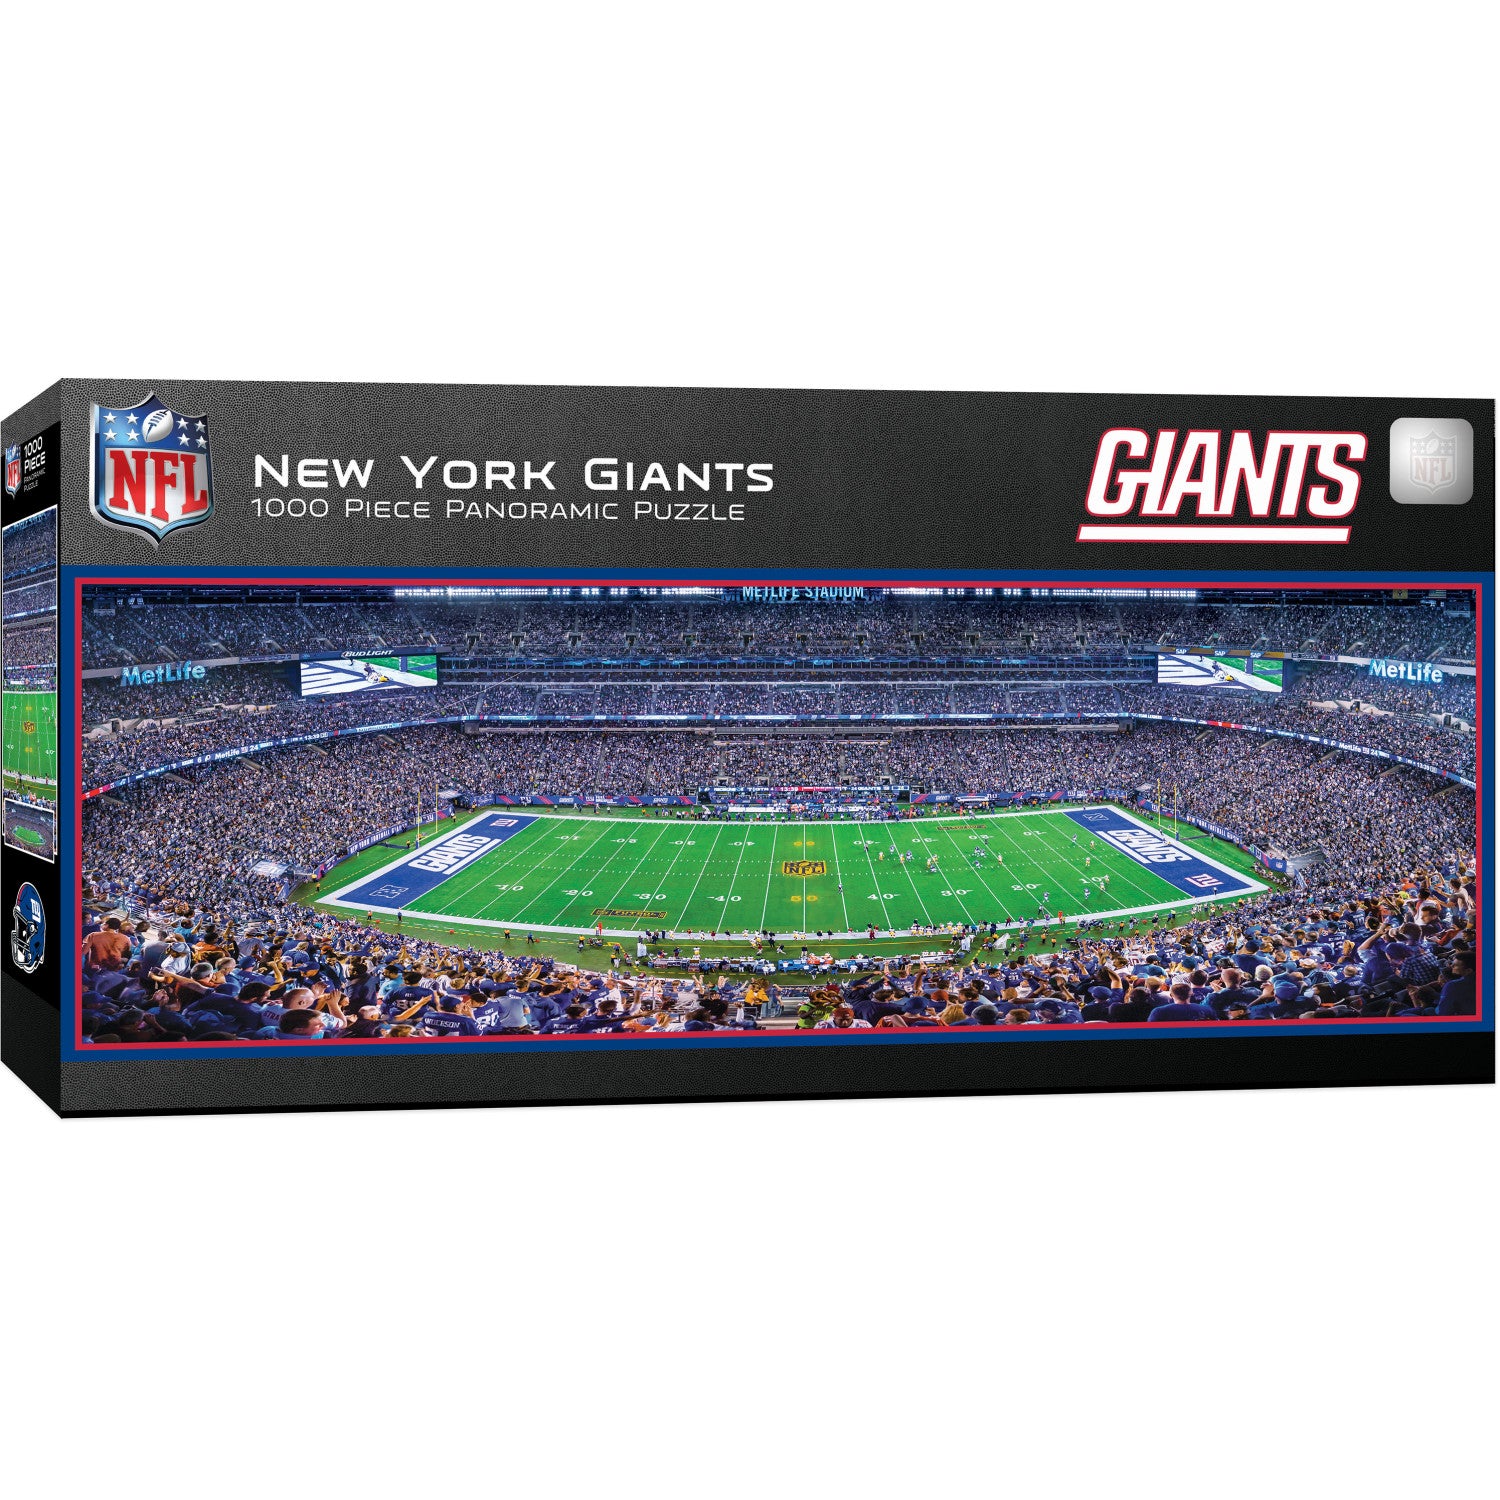 New York Giants - 1000 Piece Panoramic Puzzle